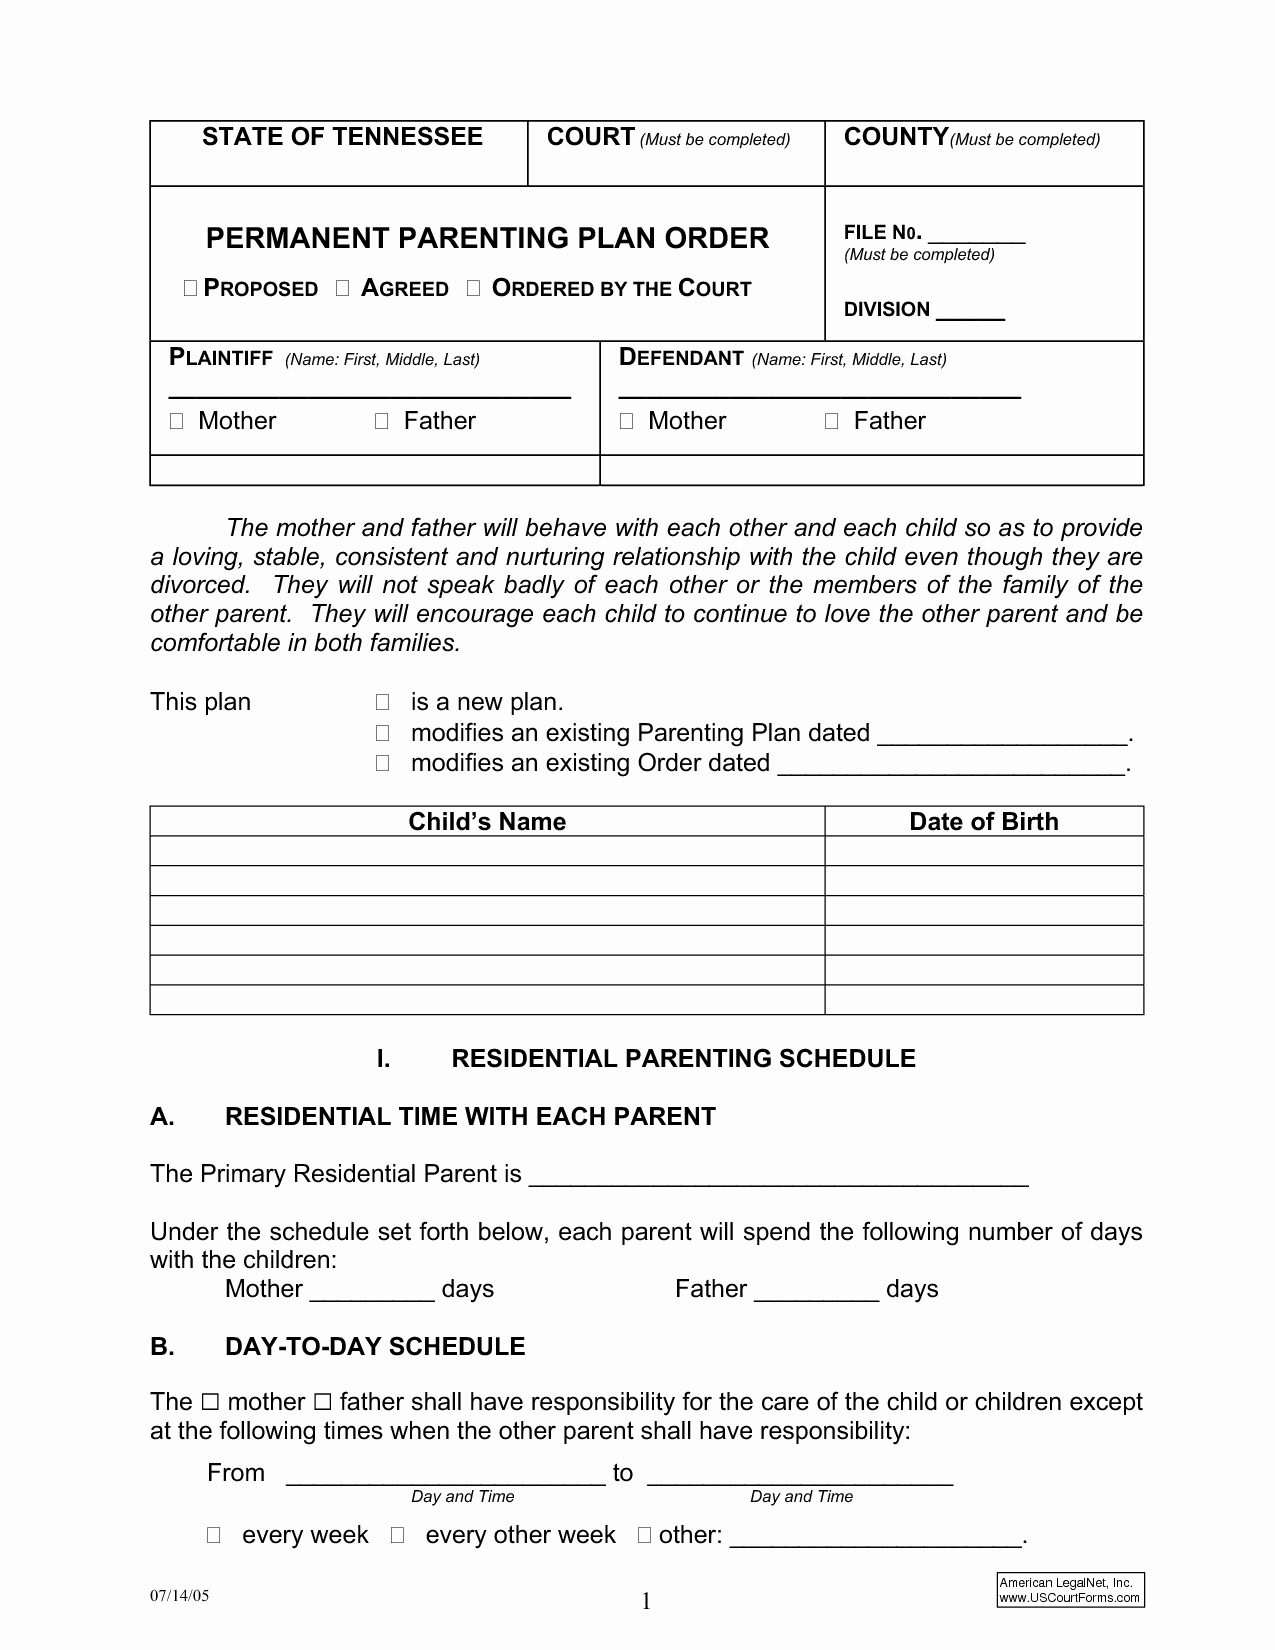 Parenting Plan Template Free Fresh Parenting Plan Template